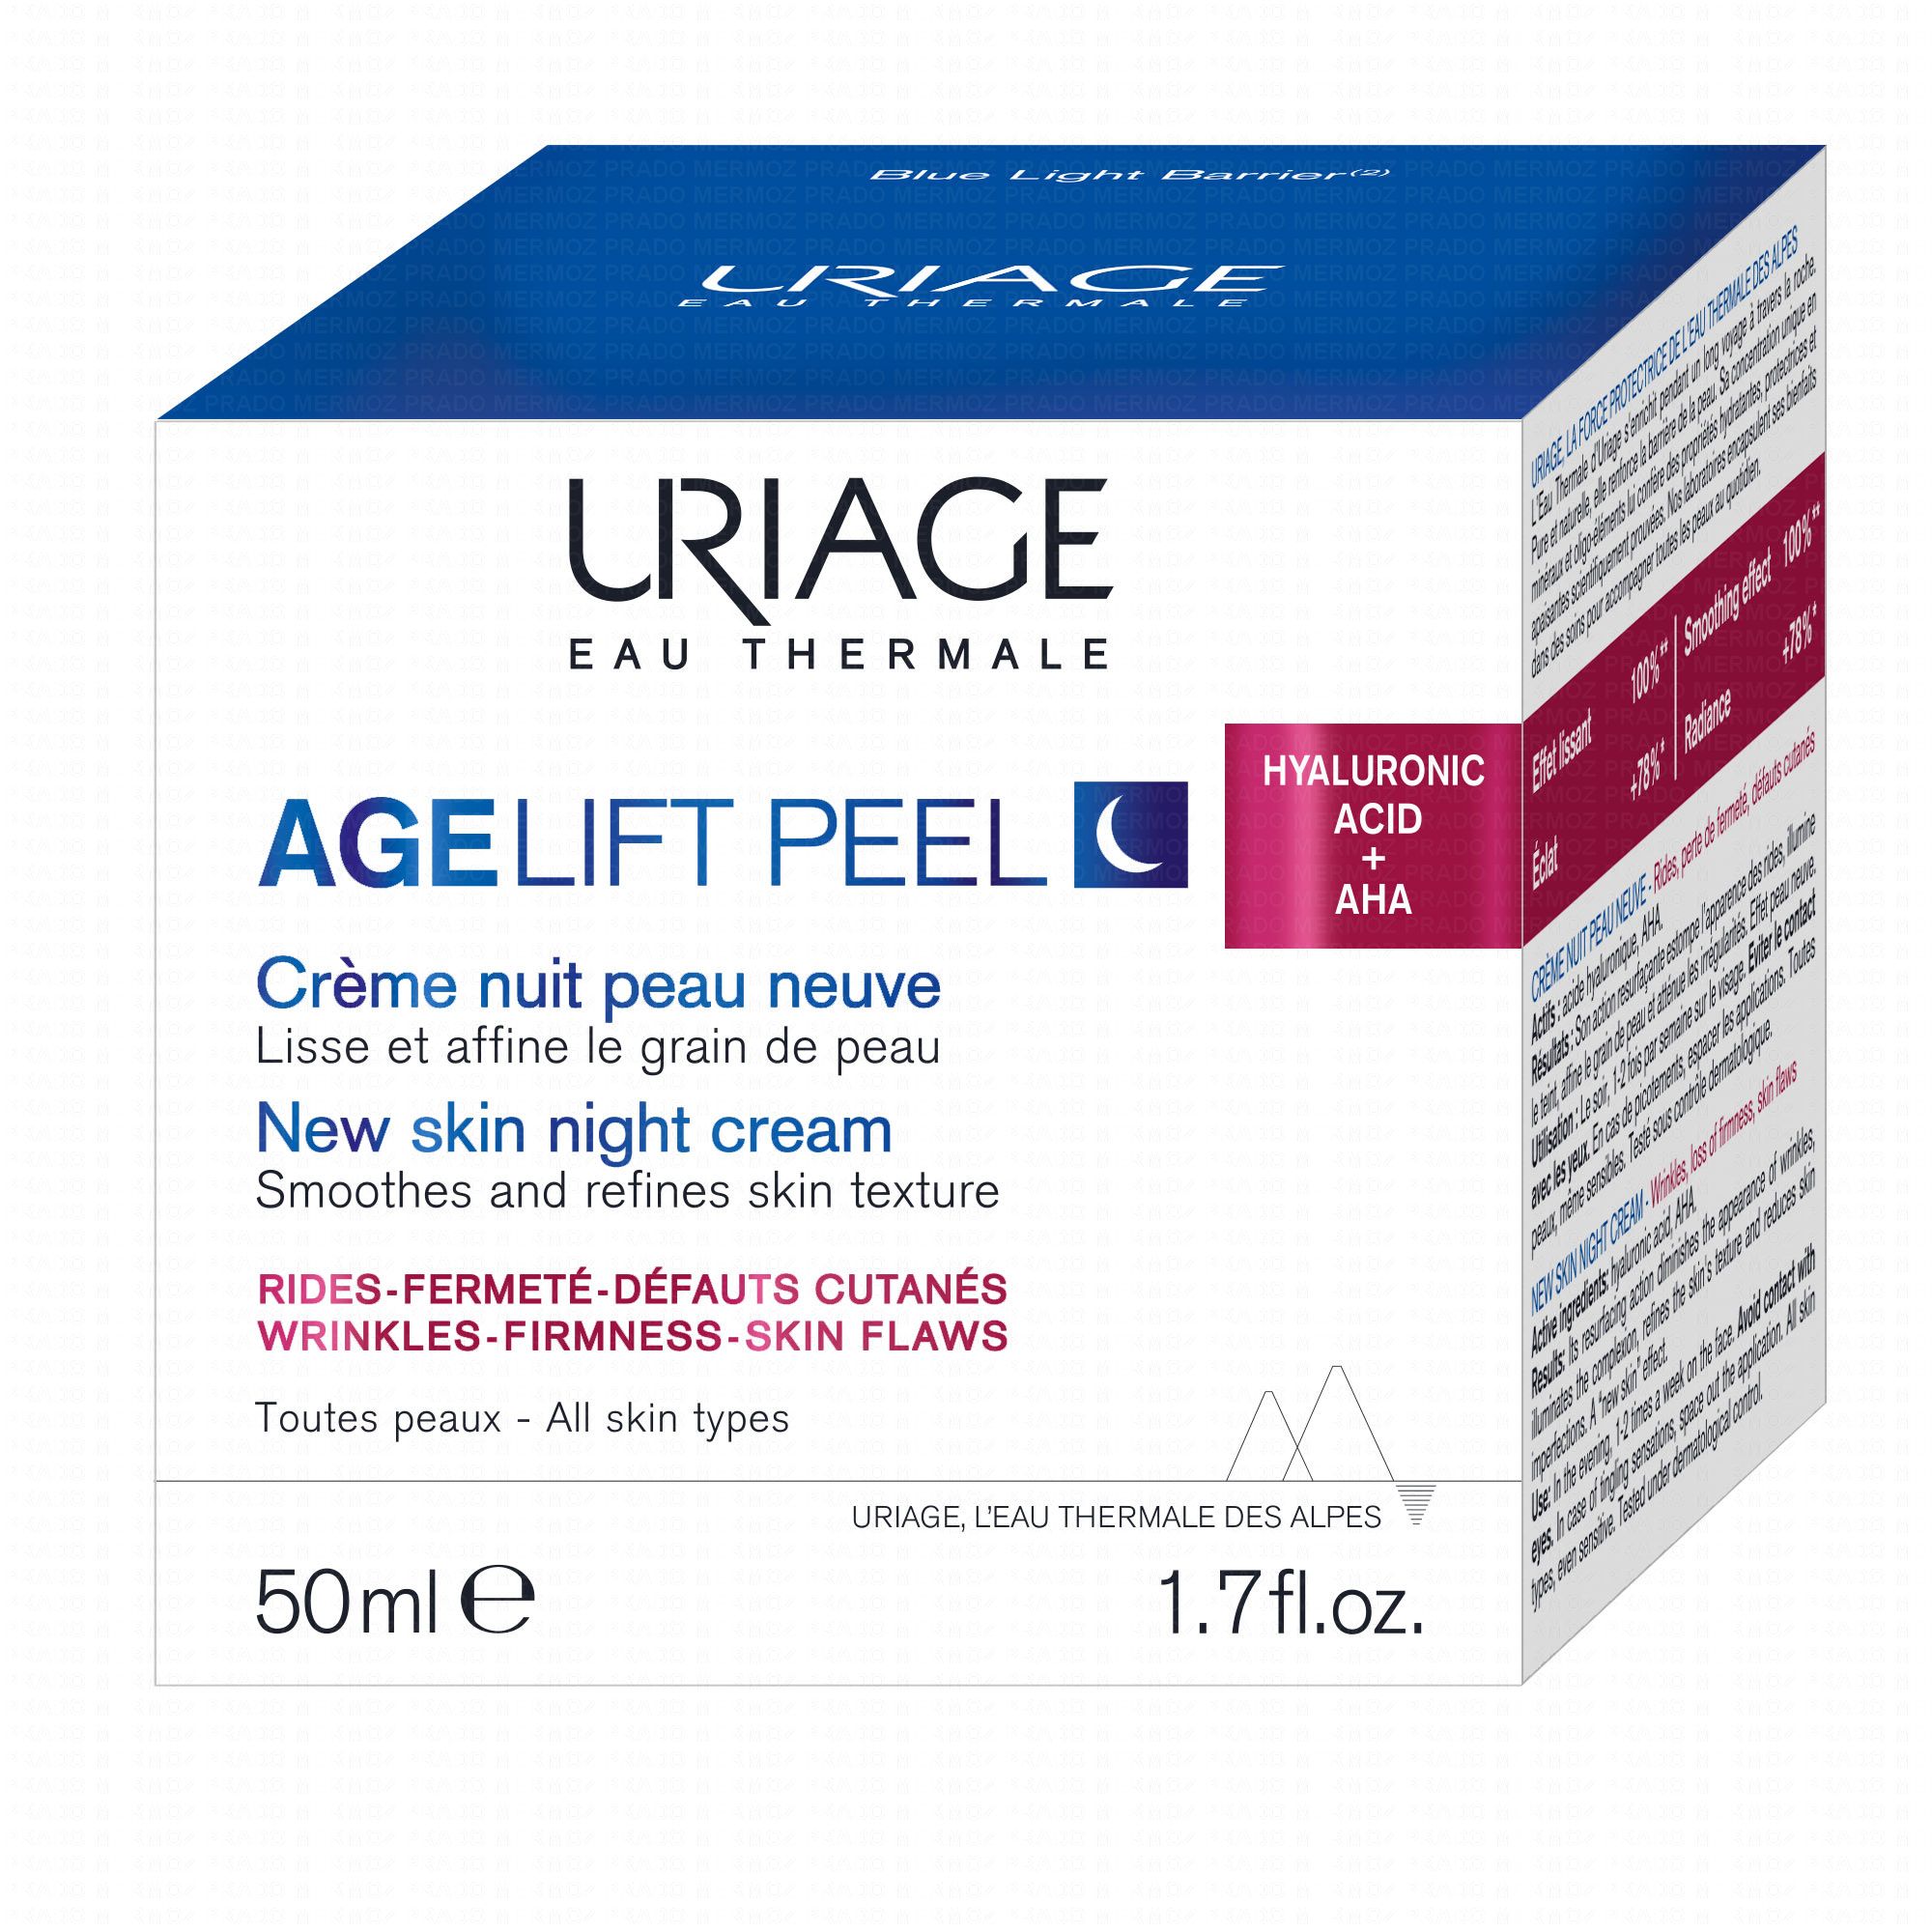 URIAGE Age Lift Peel - crème de nuit peau neuve 50ml - Parapharmacie Prado  Mermoz